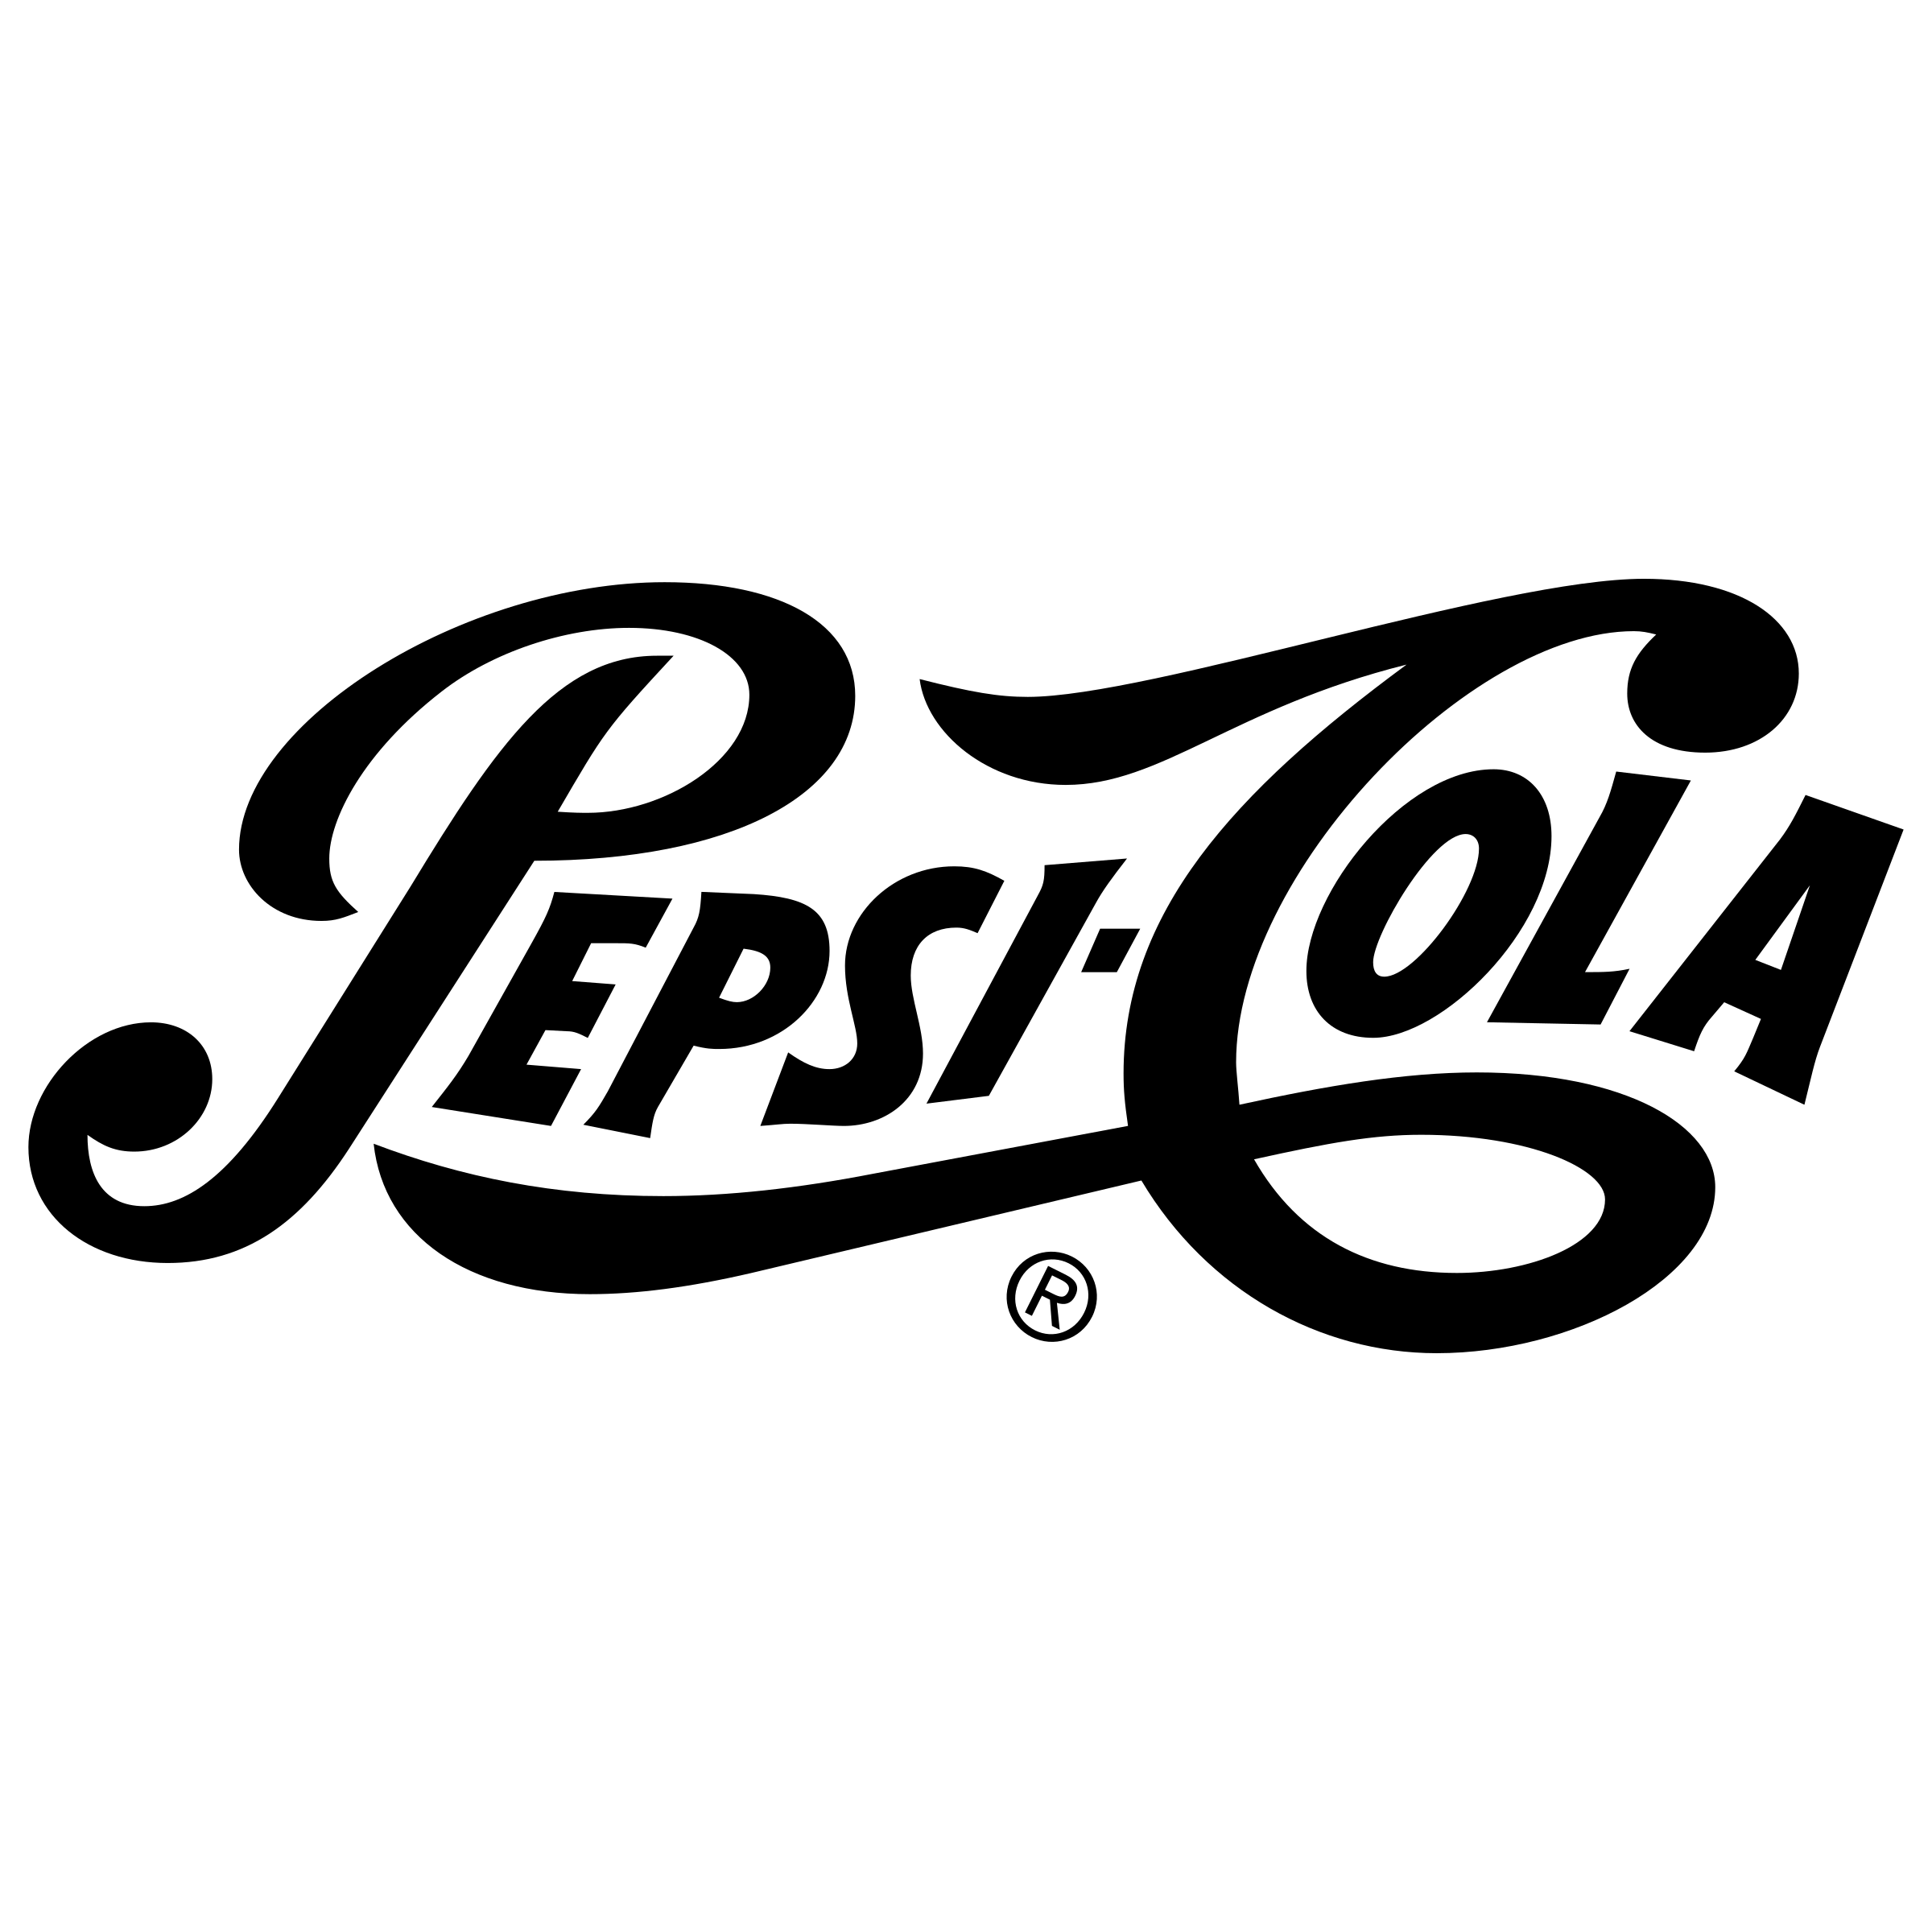 Black and White Pepsi Logo - Pepsi Cola Logo PNG Transparent & SVG Vector - Freebie Supply